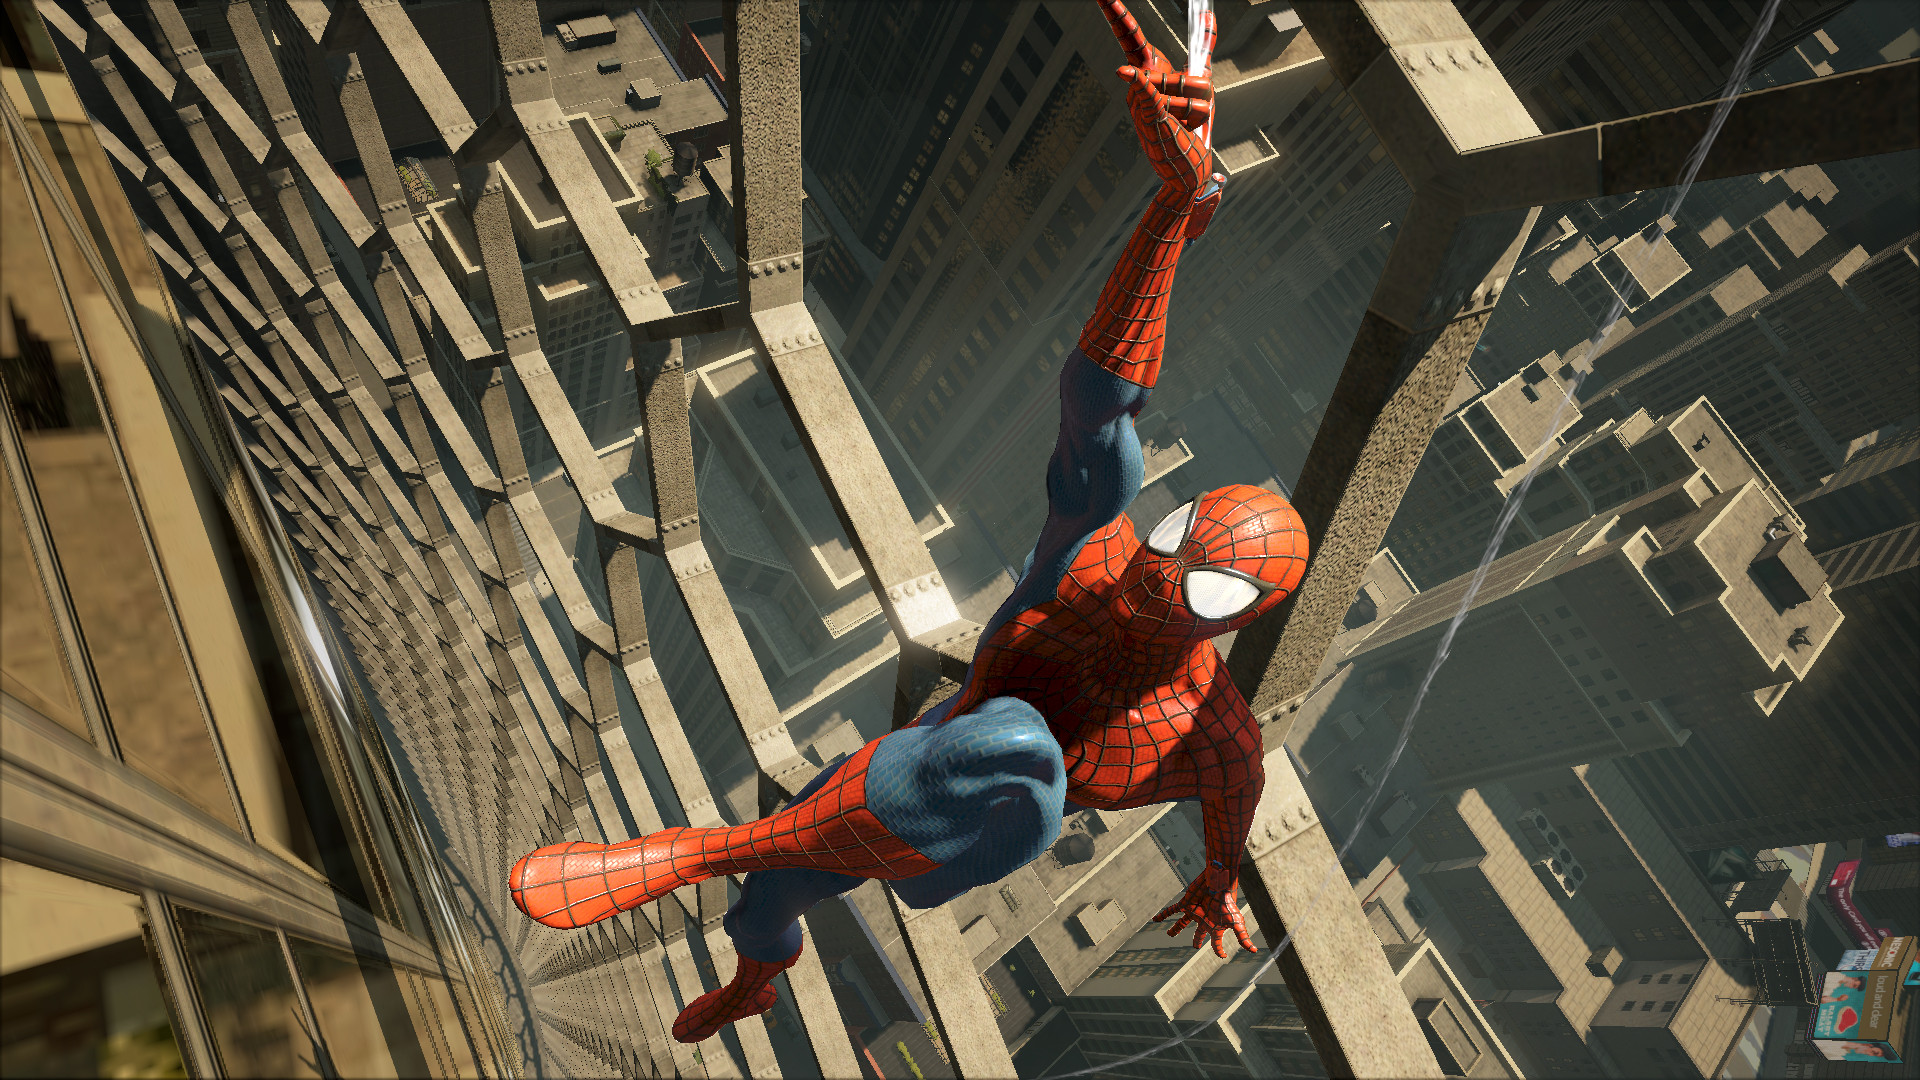 Игры человек паук на телефоне бесплатные. Spider man 2014 игра. The amazing Spider-man 2 (игра, 2014). Человек паук Амейзинг 2. Амазинг человек паук 2.